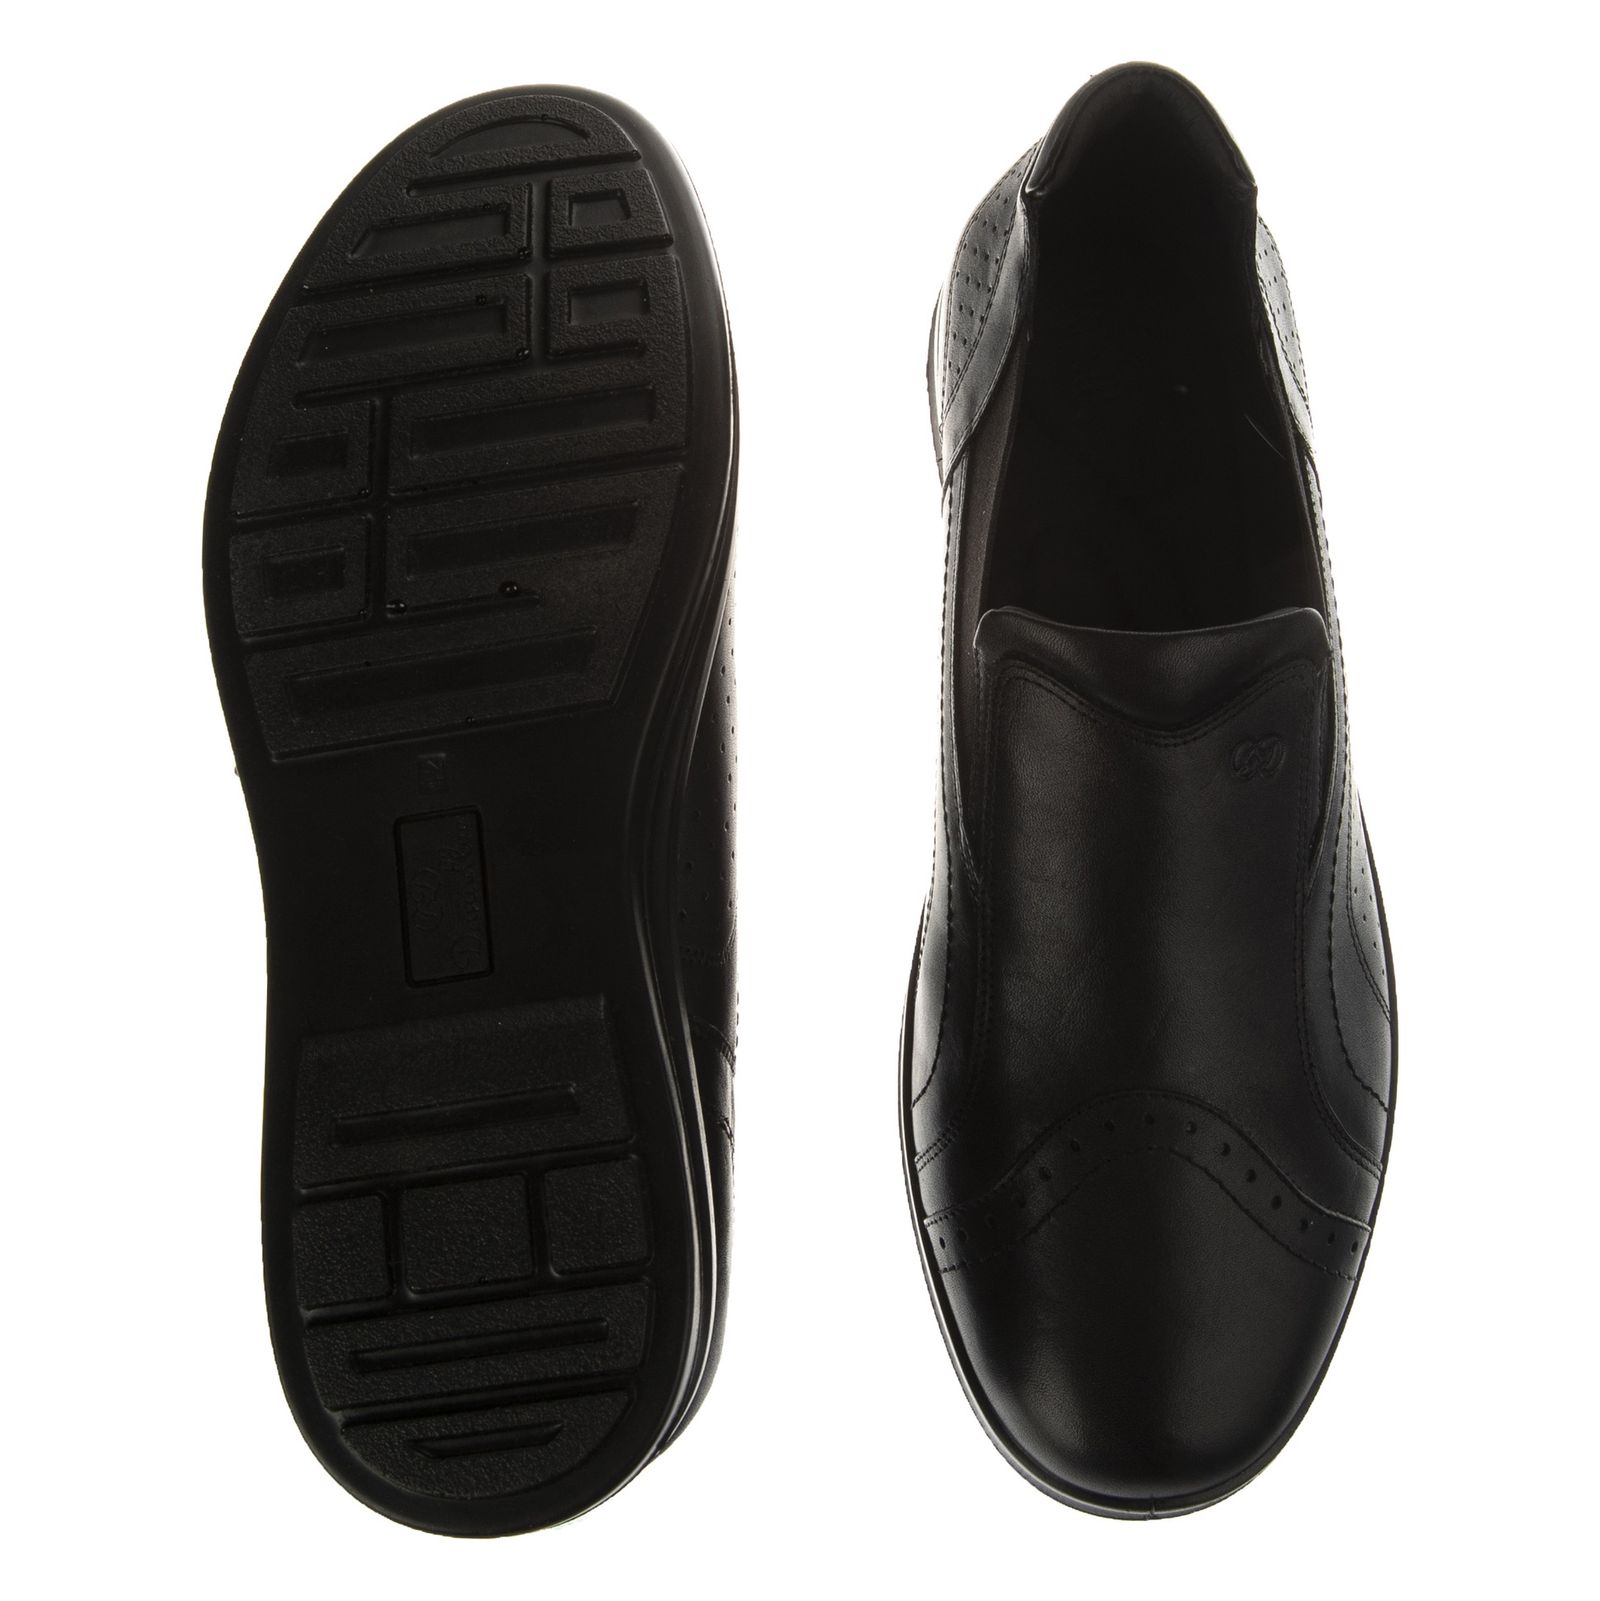 کفش مردانه دنیلی مدل 113110261001 -  - 3